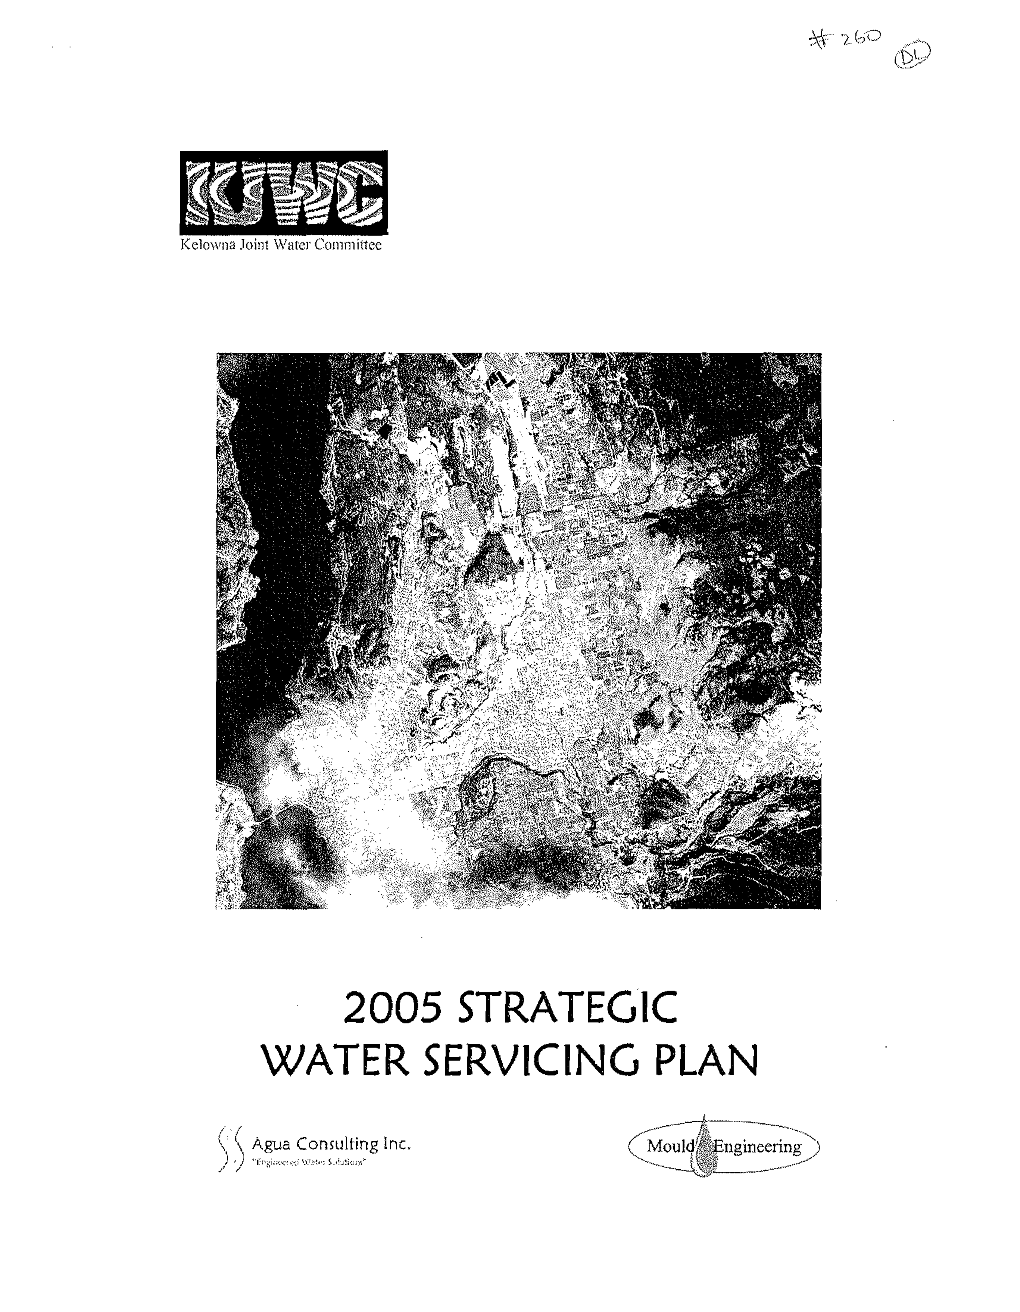 2005 STRATEGIC WATER SERVICING PLAN 1 1 1 1 1 1 1 1 1 1 1 1 1 1 1 1 1 1 1 1 1 1 1 1 1 1 1 1 I (\.\.F'~""'.F( Agua Consulting Inc